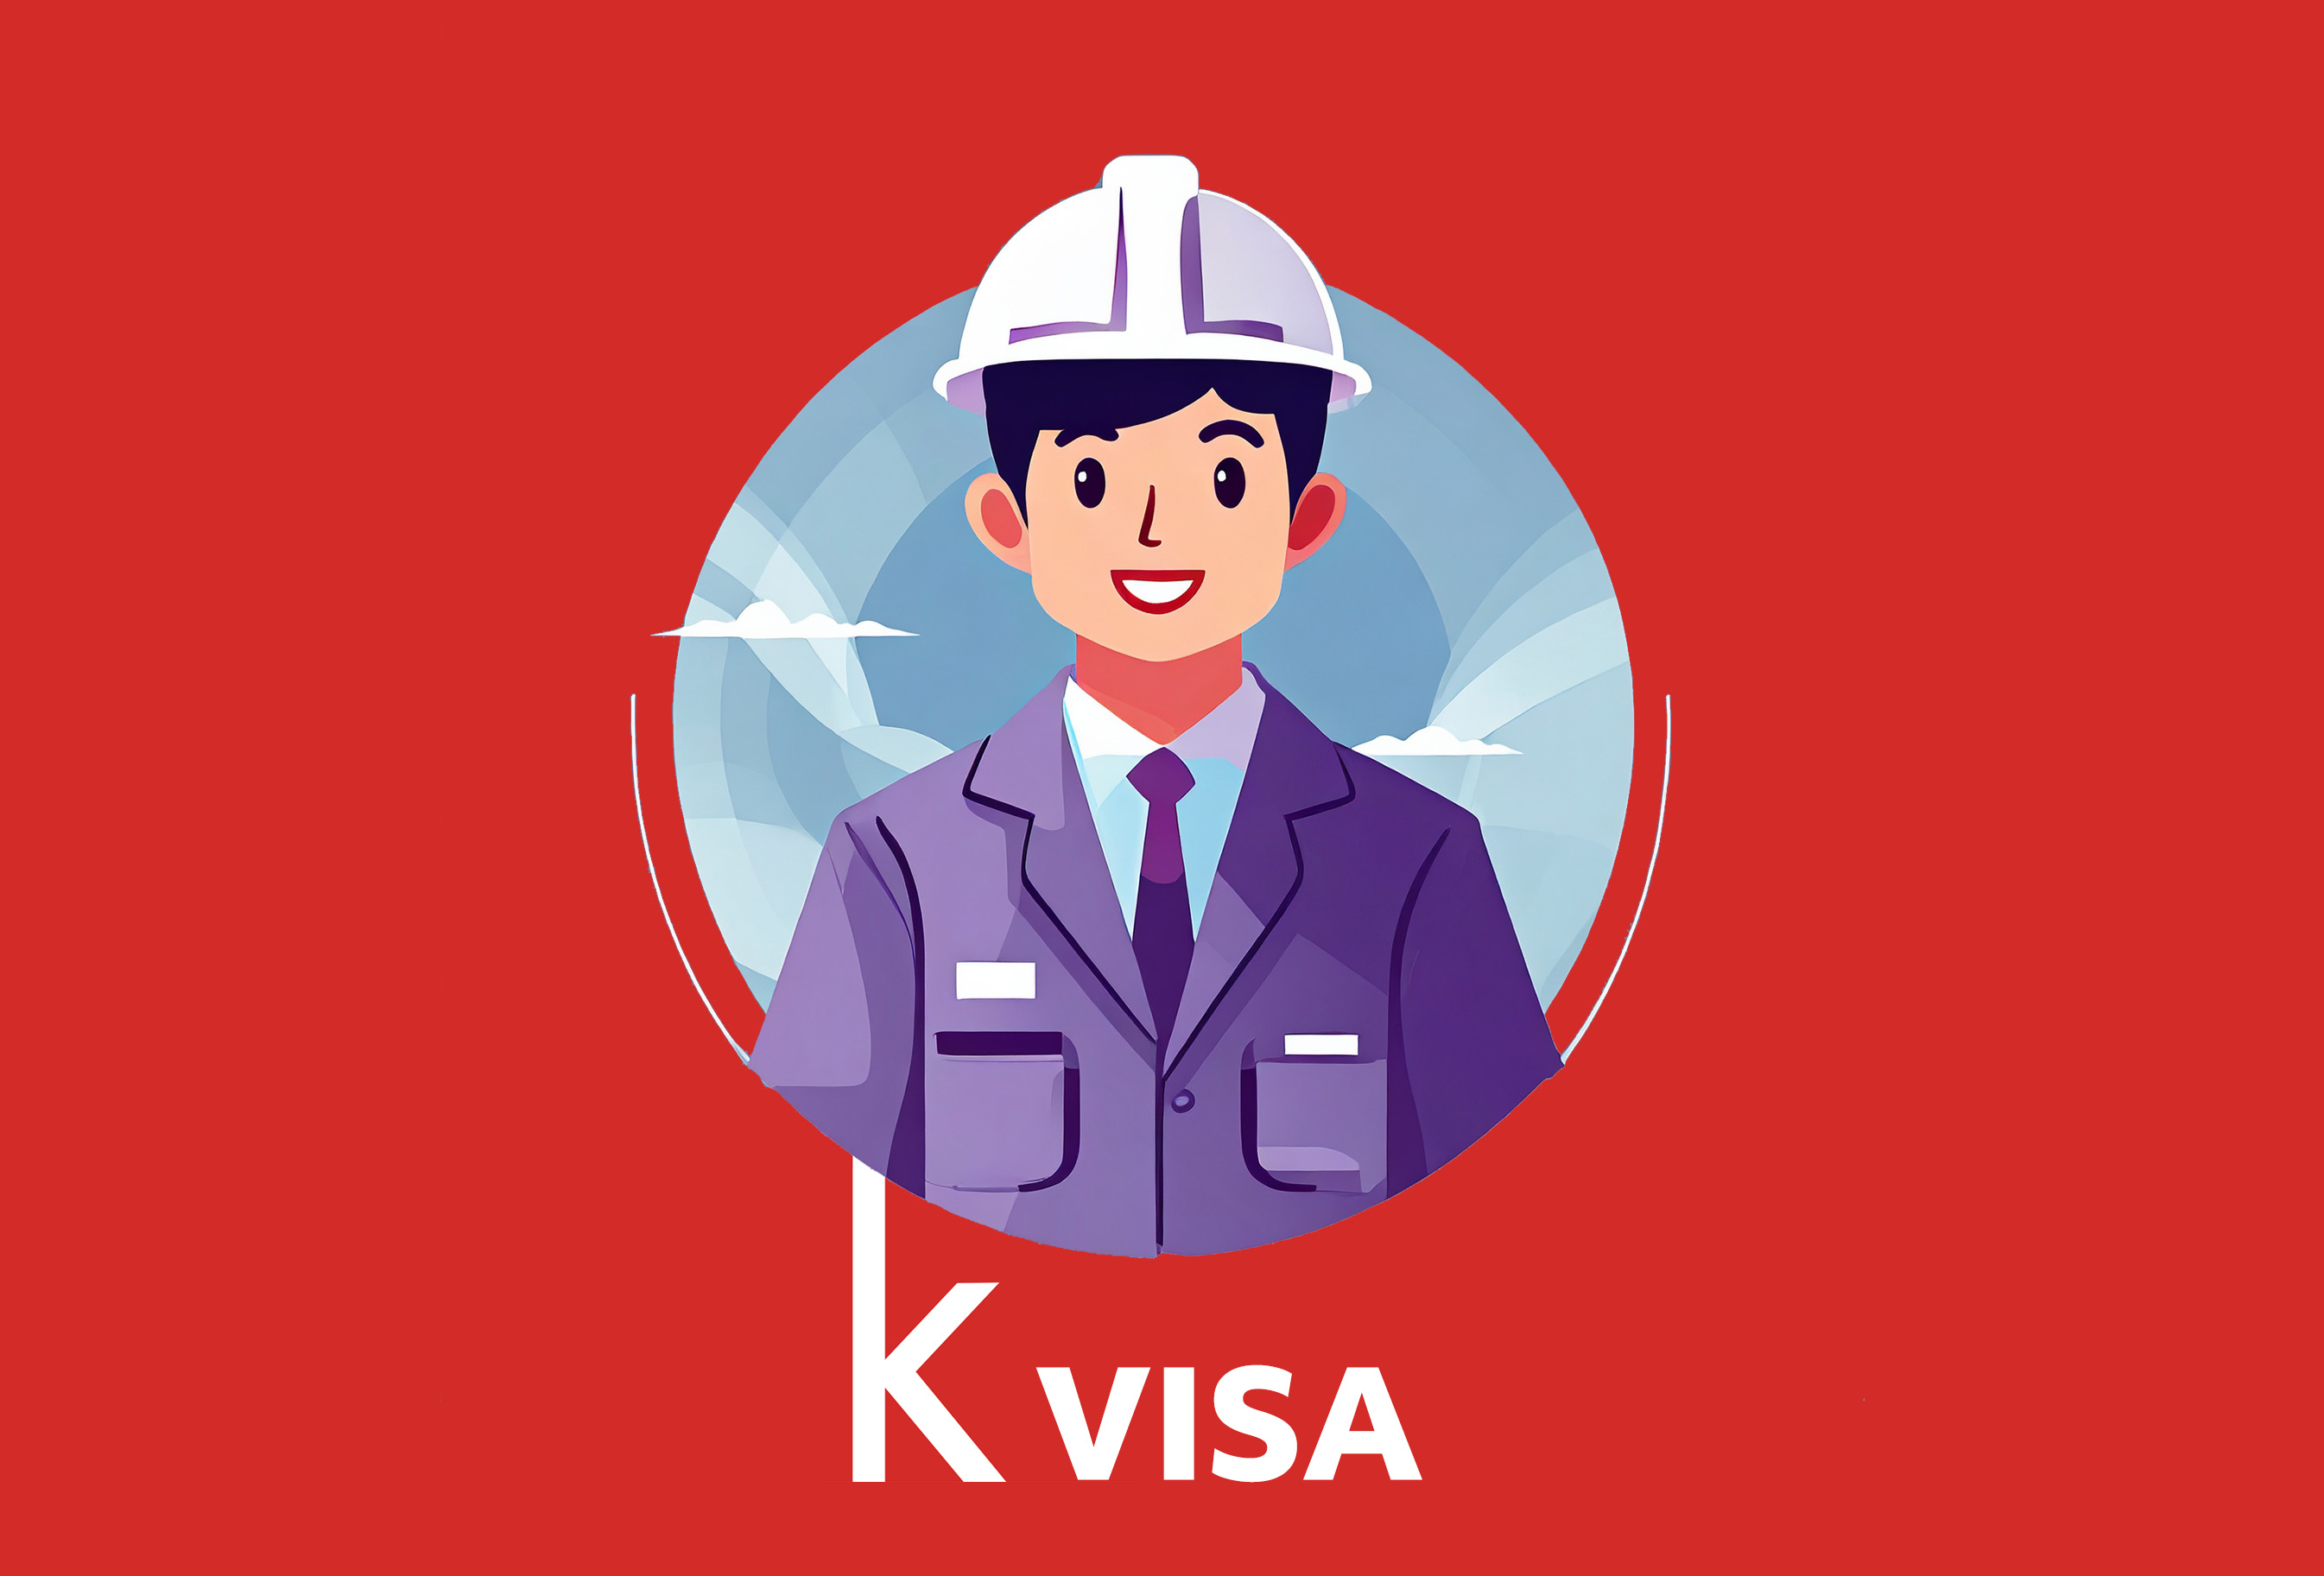 E9 Visa profile.jpg